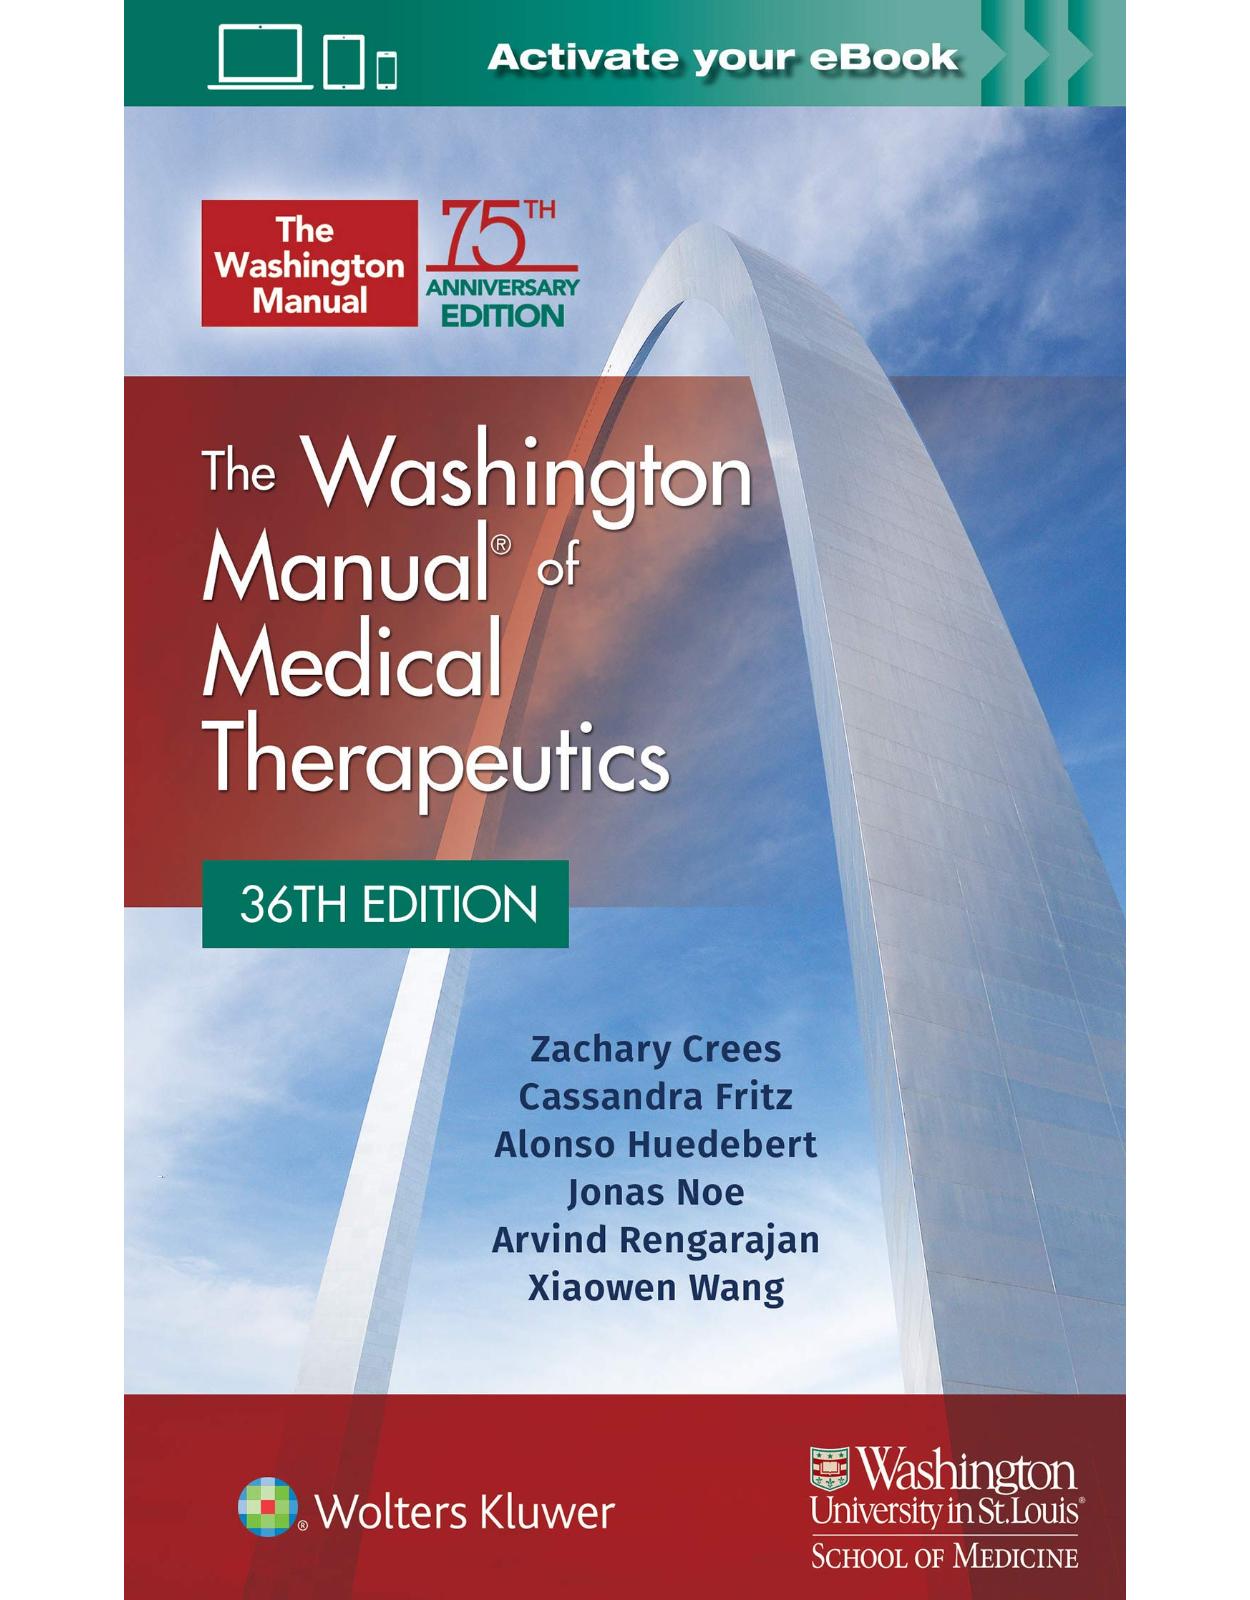 The Washington Manual of Medical Therapeutics 